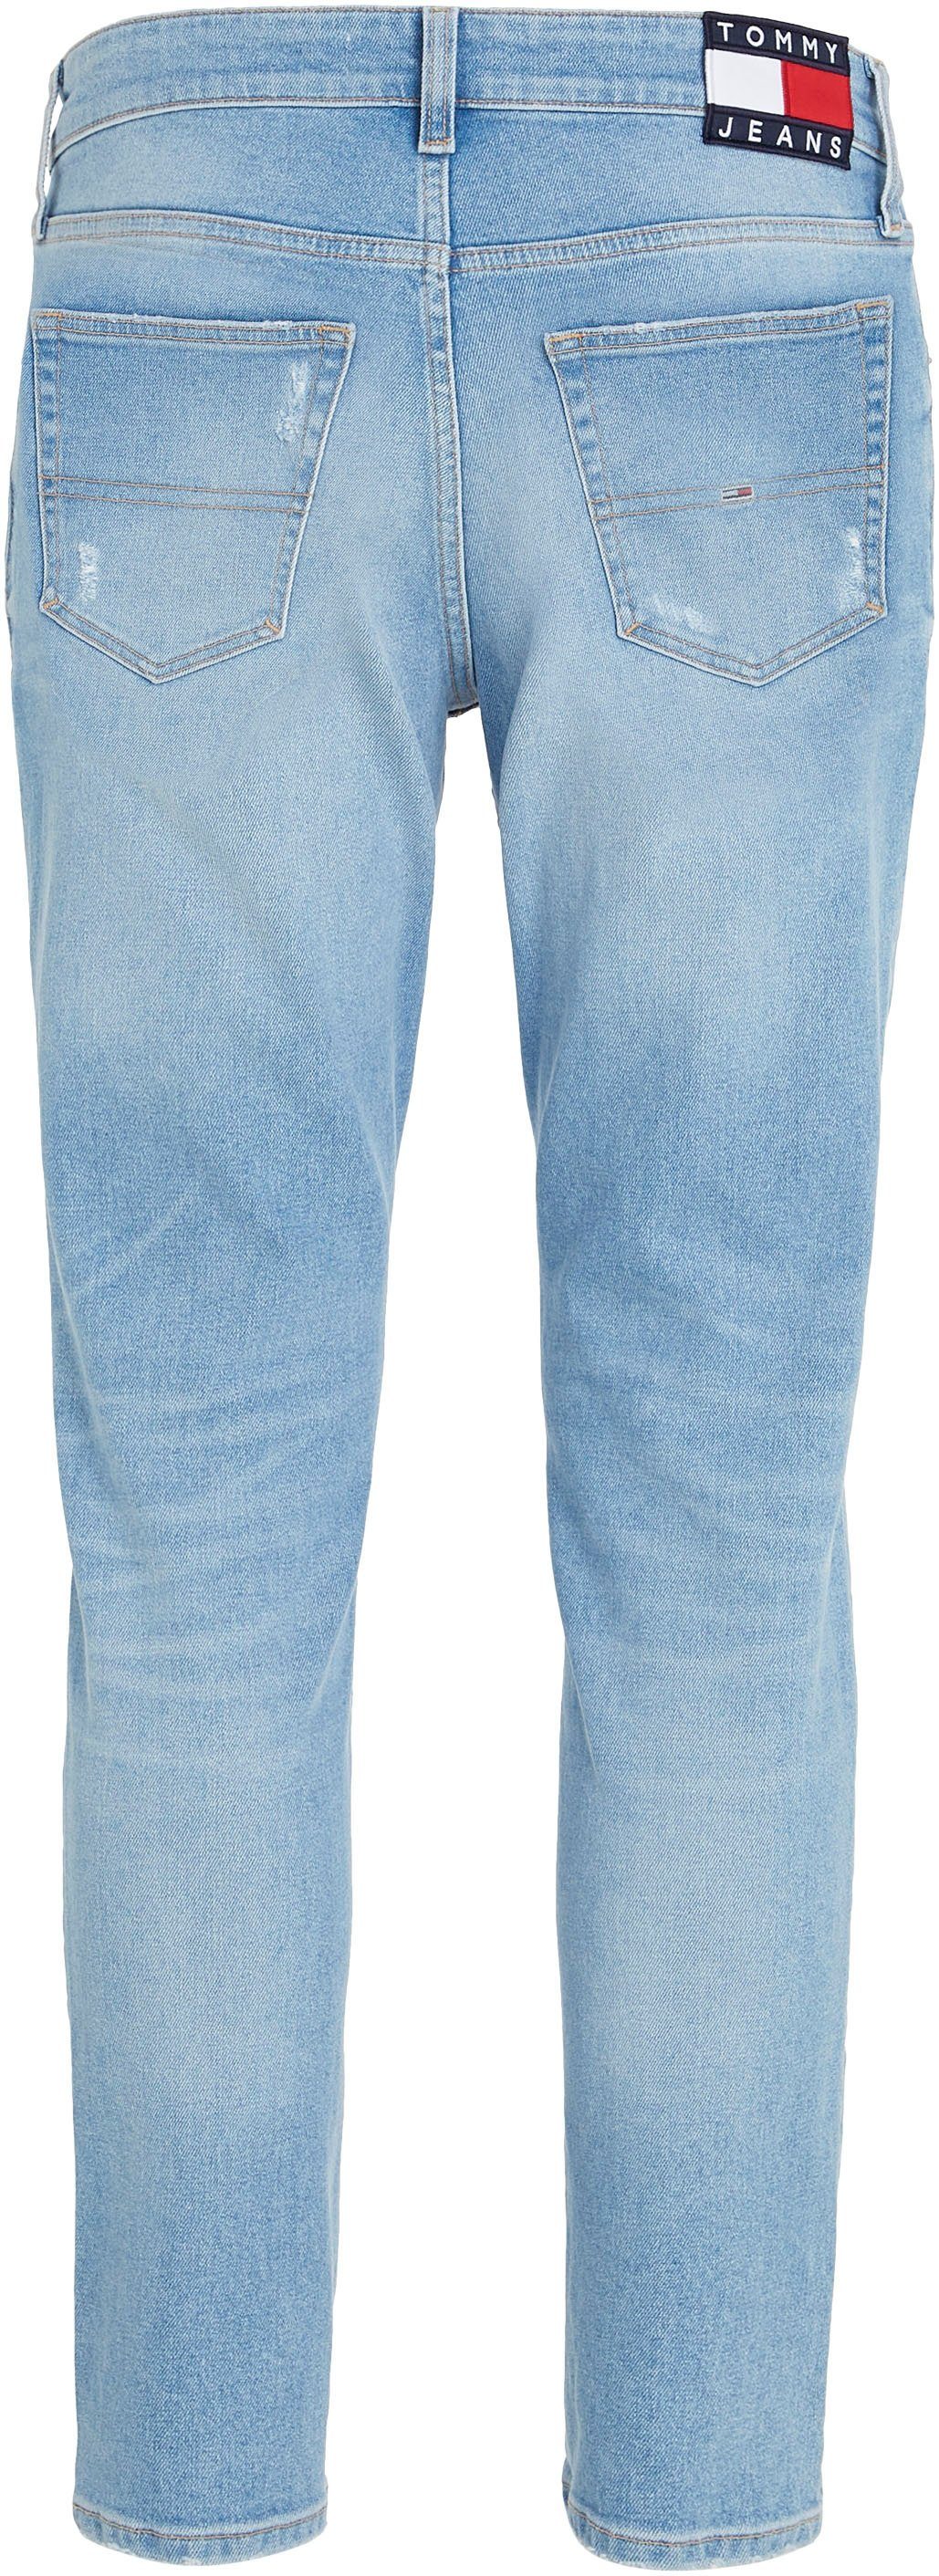 BG7114 Markenlabel Jeans Slim-fit-Jeans DenimLight mit AUSTIN Tommy SLIM TPRD